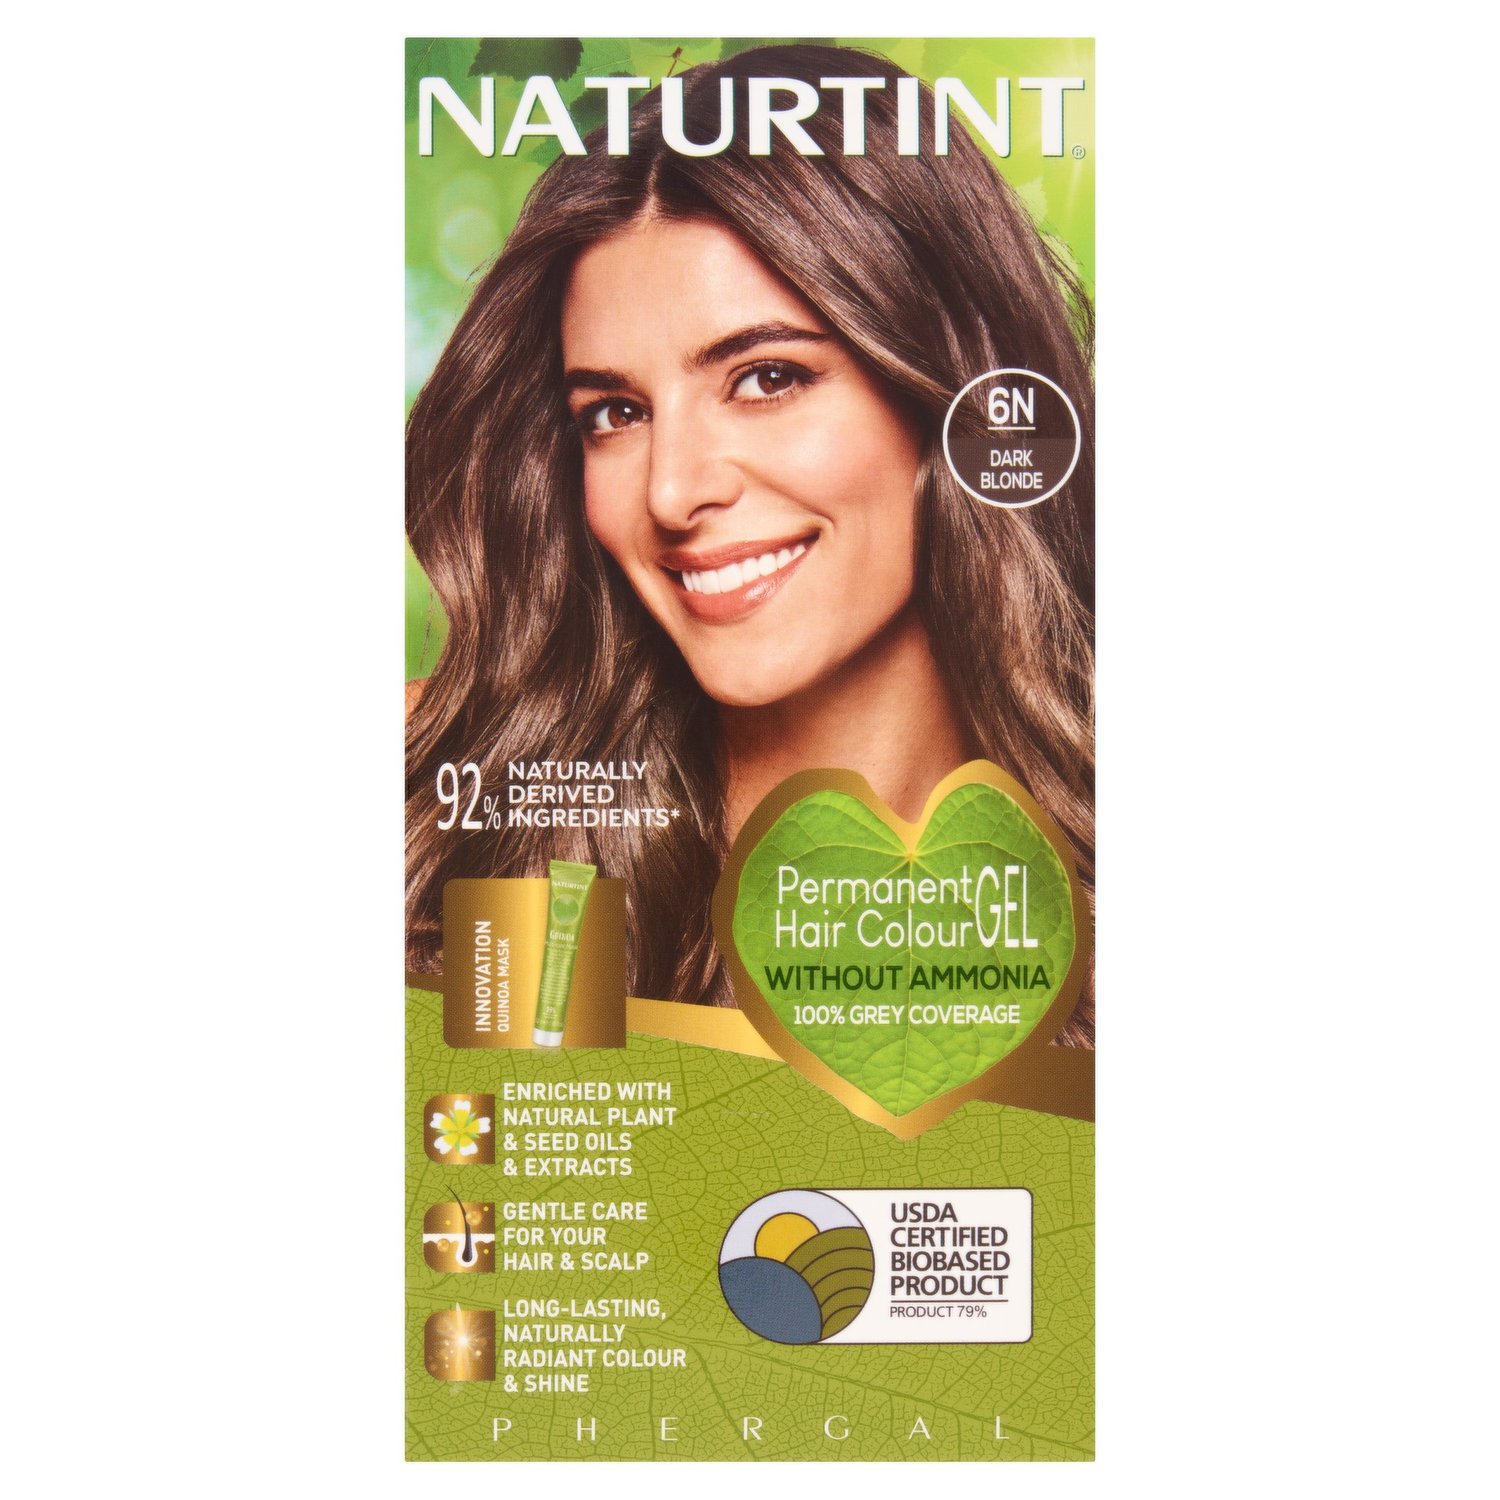 Naturtint Permanent Hair Colour Gel 6N Dark Blonde 170ml